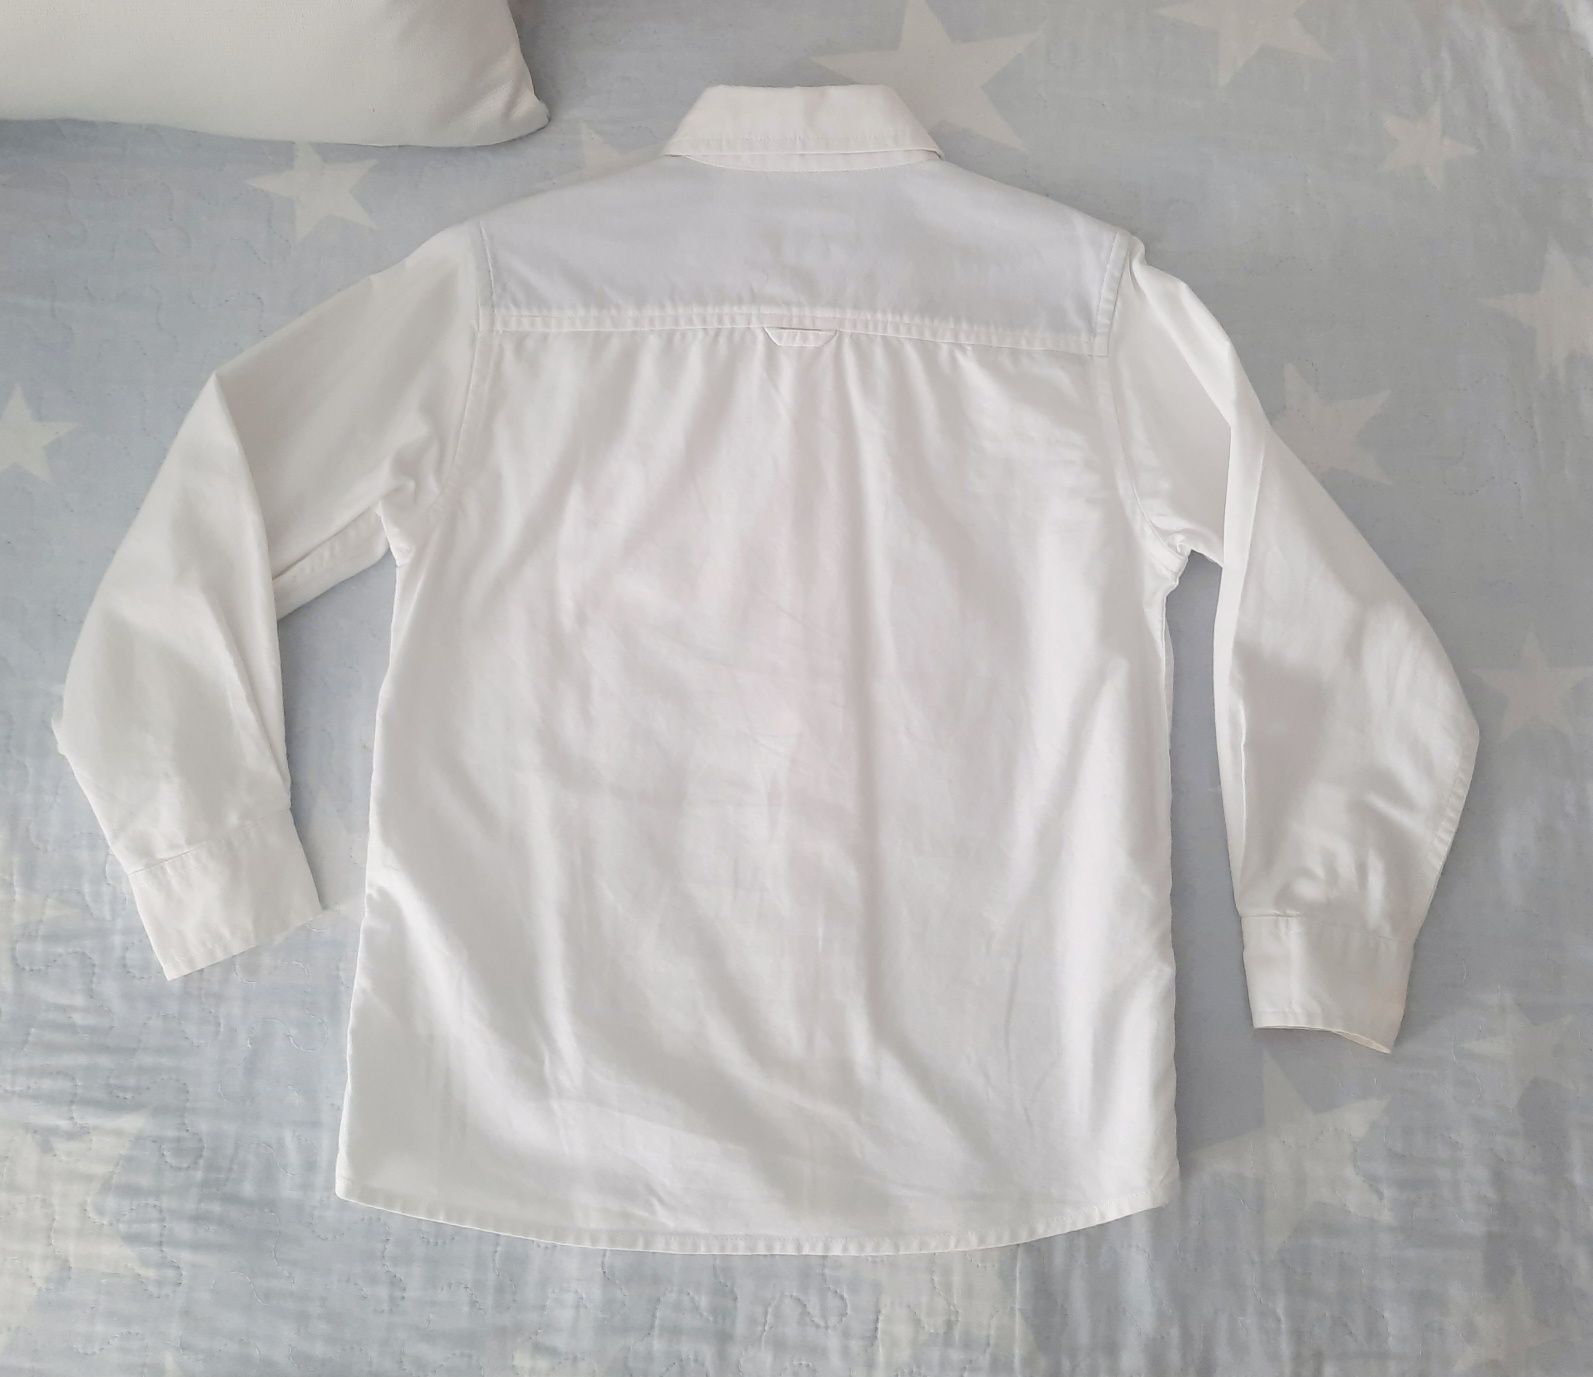 Camisa clássica branca, da Lanidor - 6/7 anos